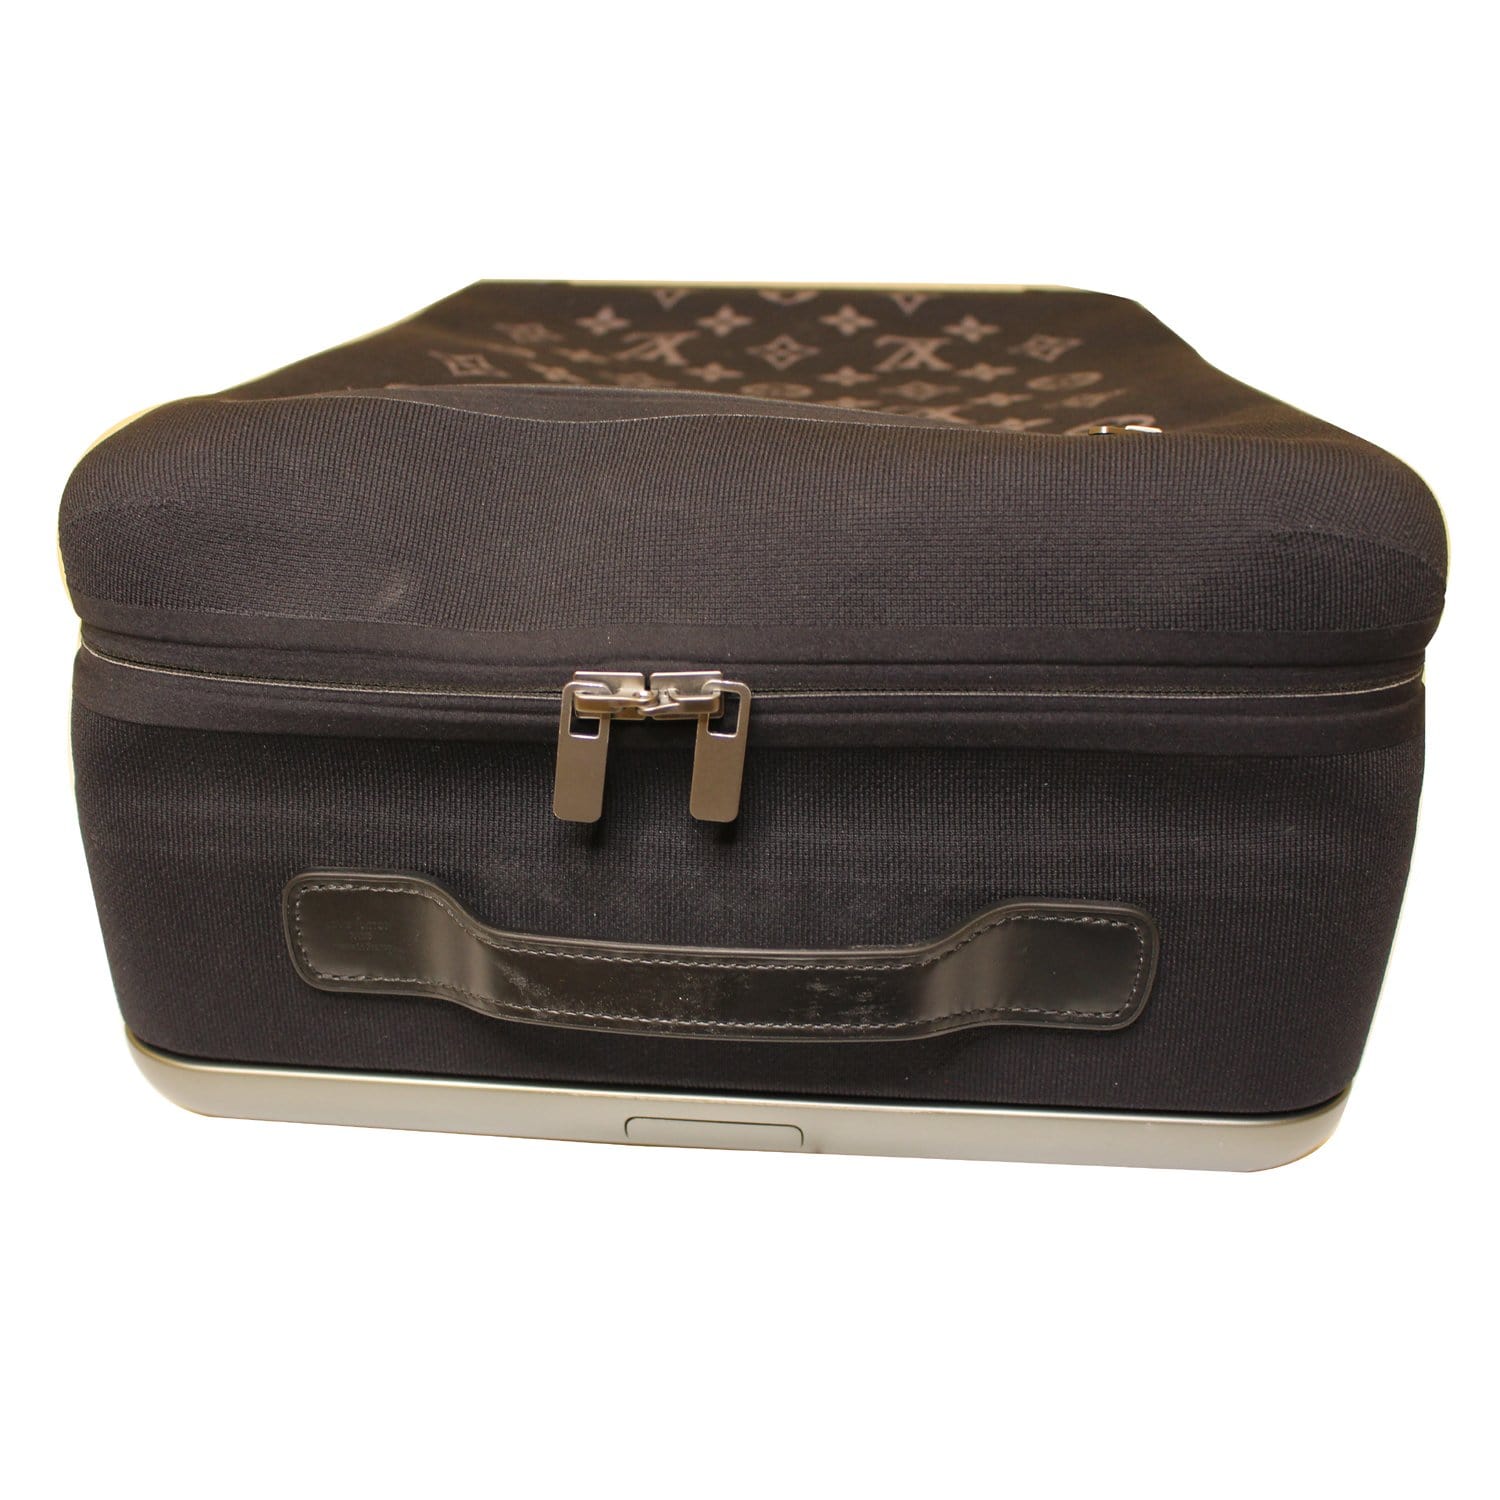 Louis Vuitton Horizon Soft Innovative Rolling Luggage